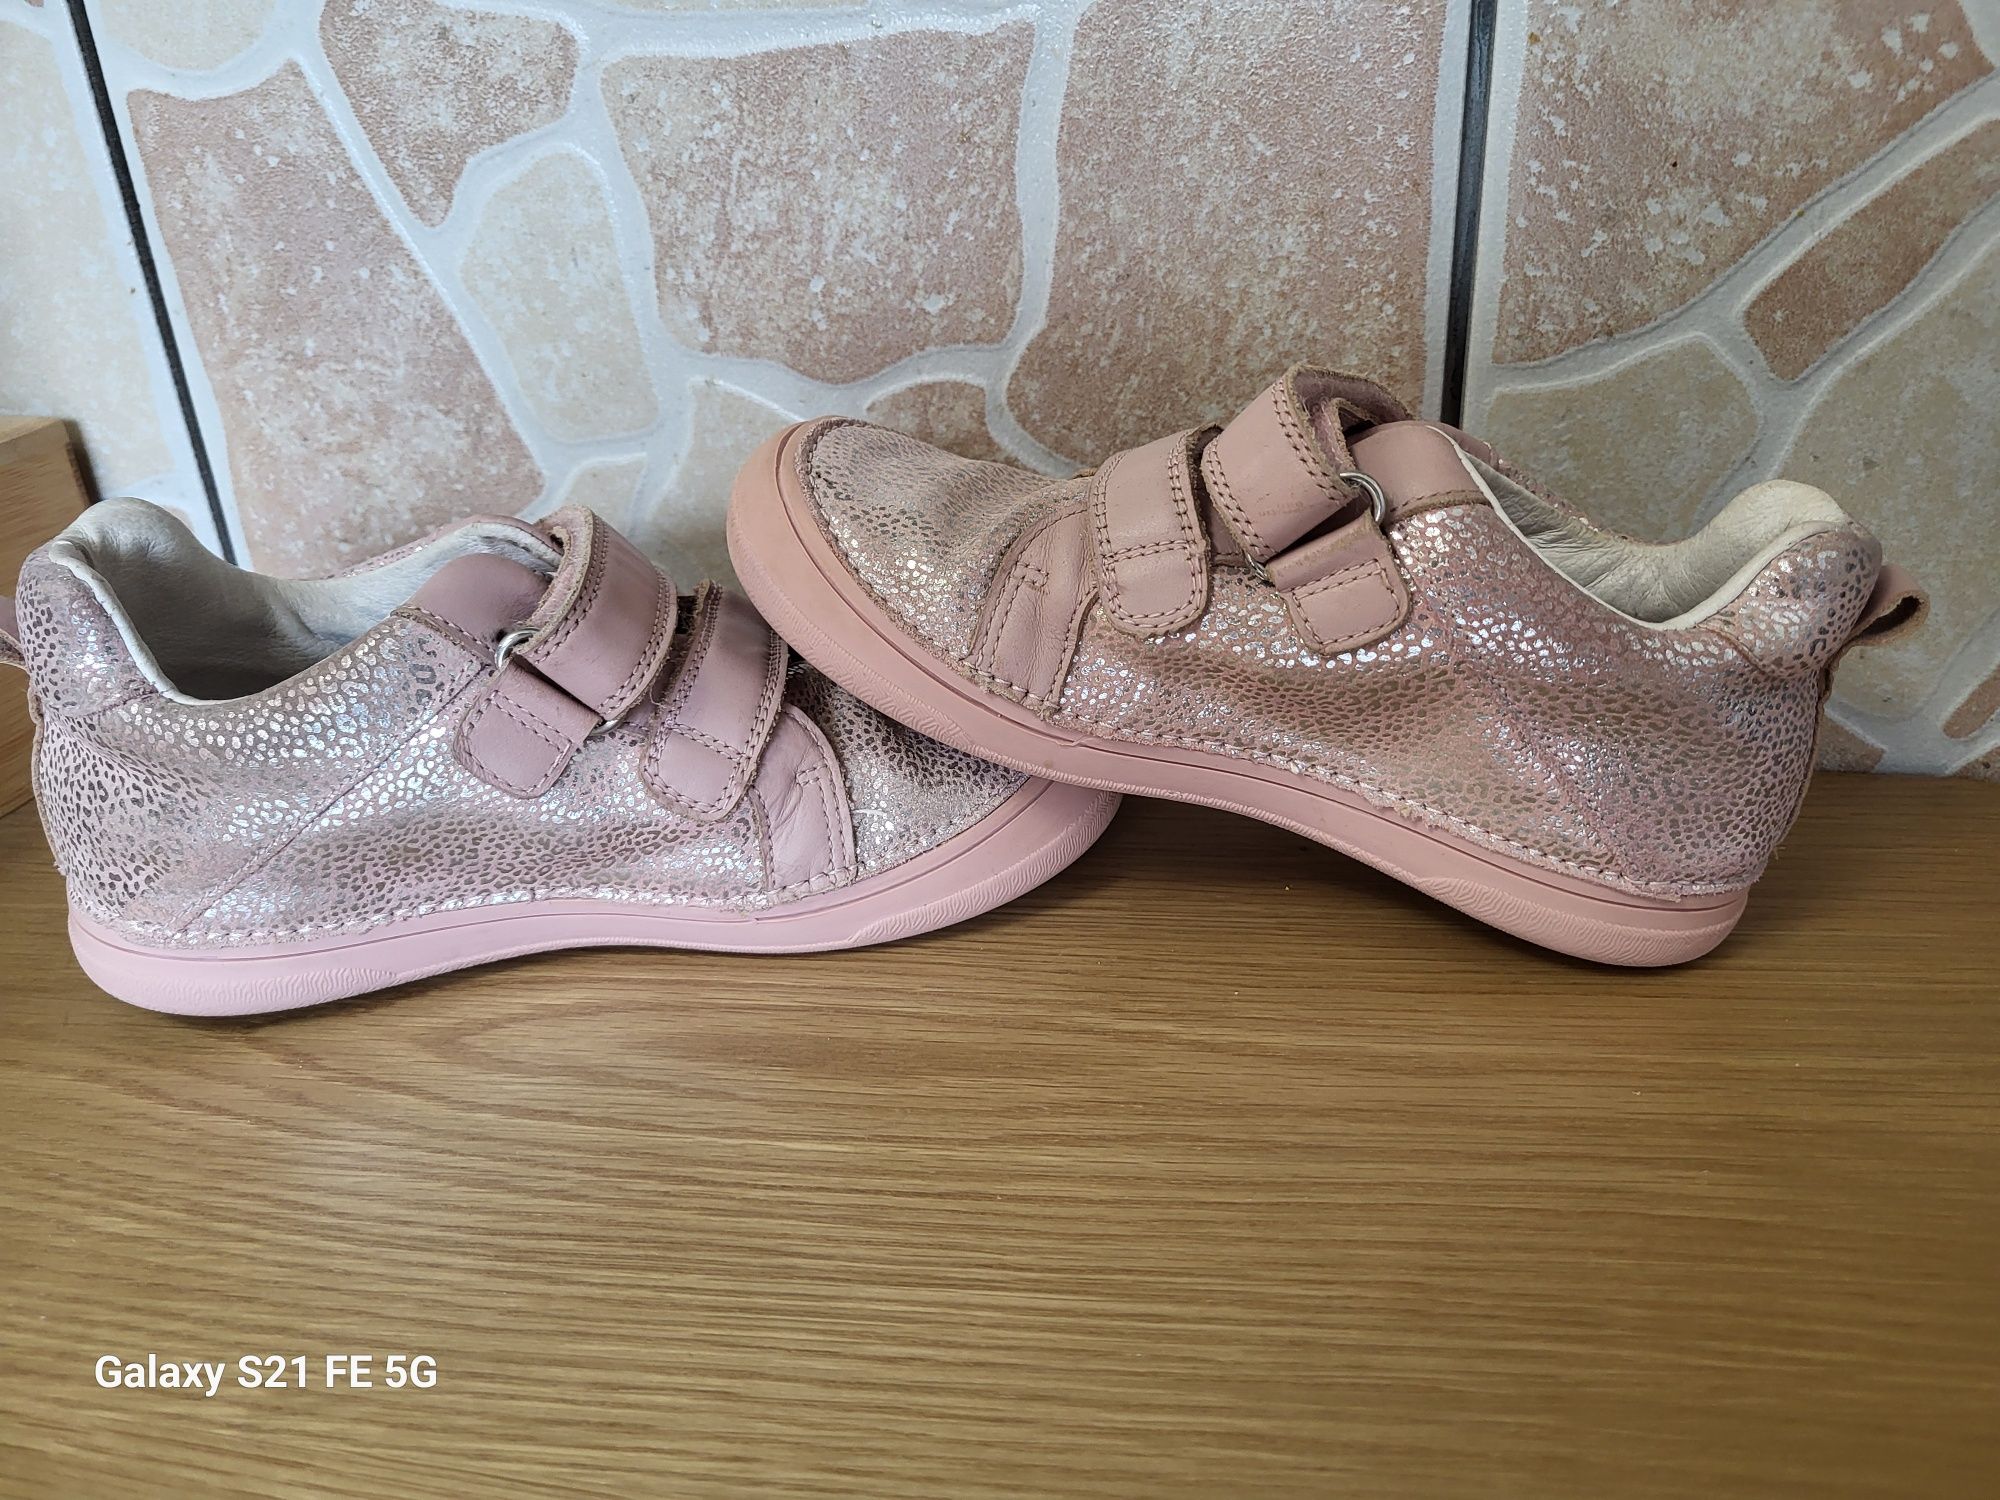 Pantofi DDSteps, mar 32, roz, din piele, talpa flexibila